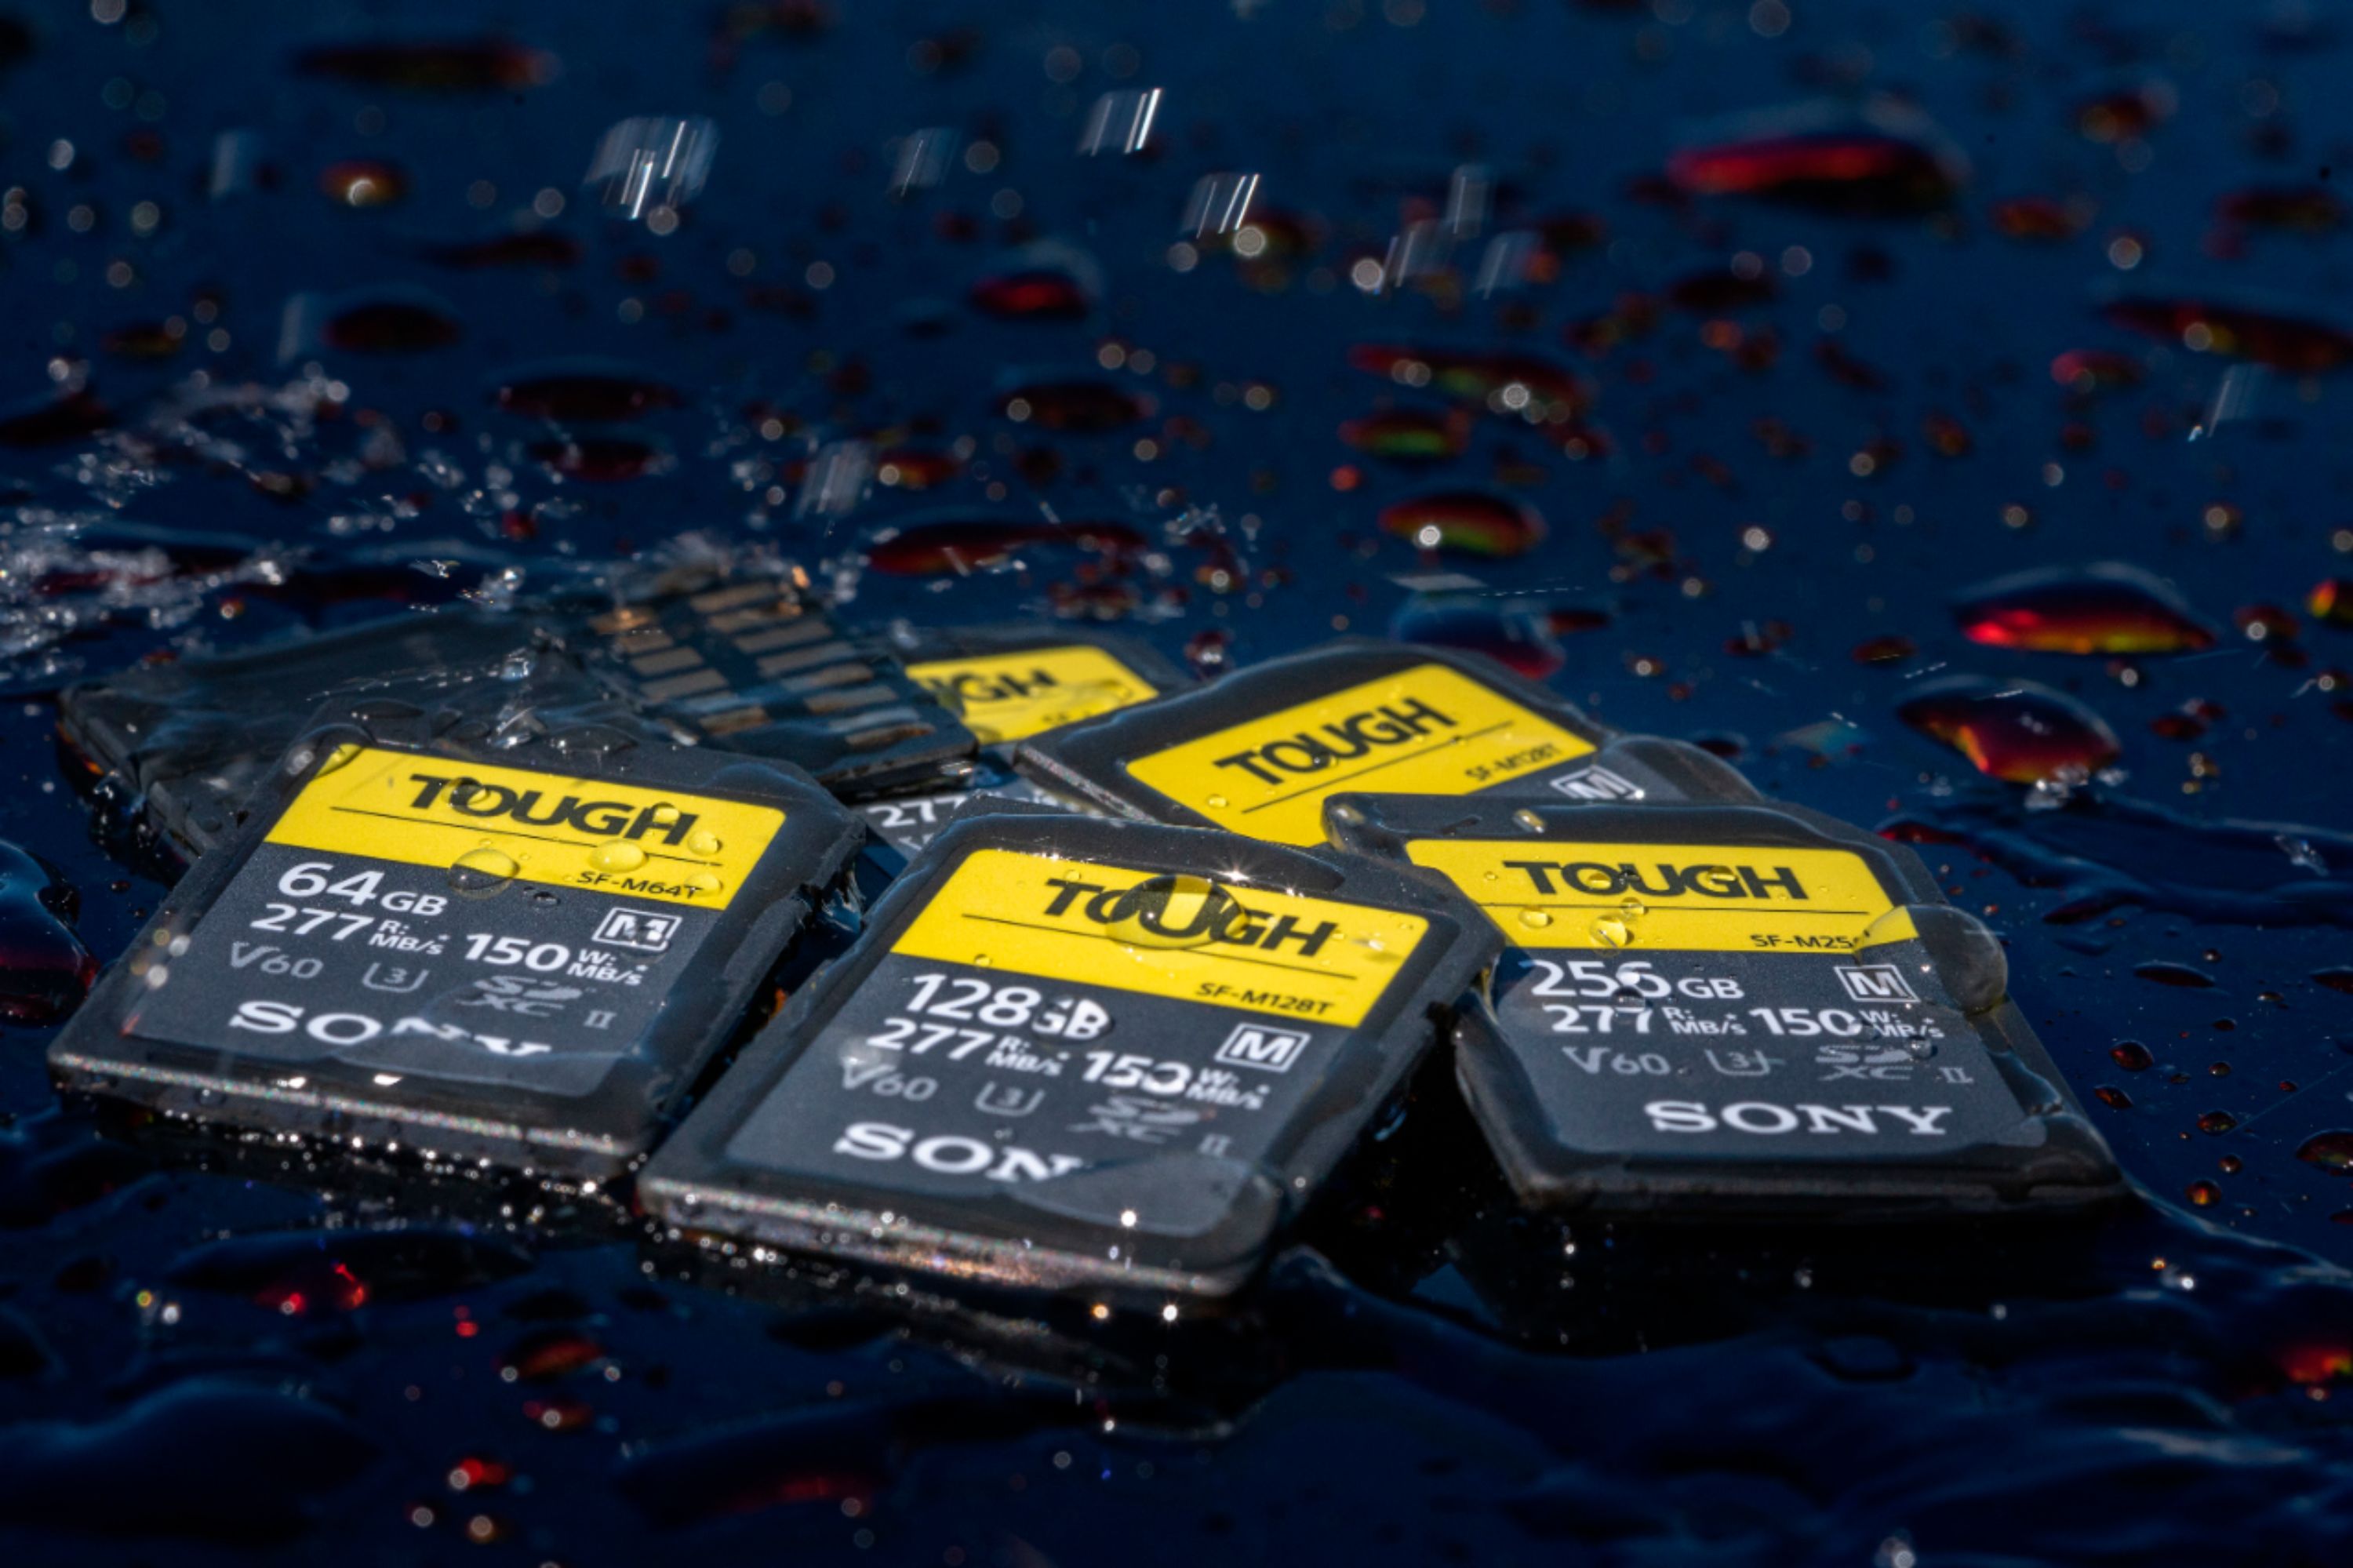 Sony Carte SDXC Tough UHSII V90 64 GB